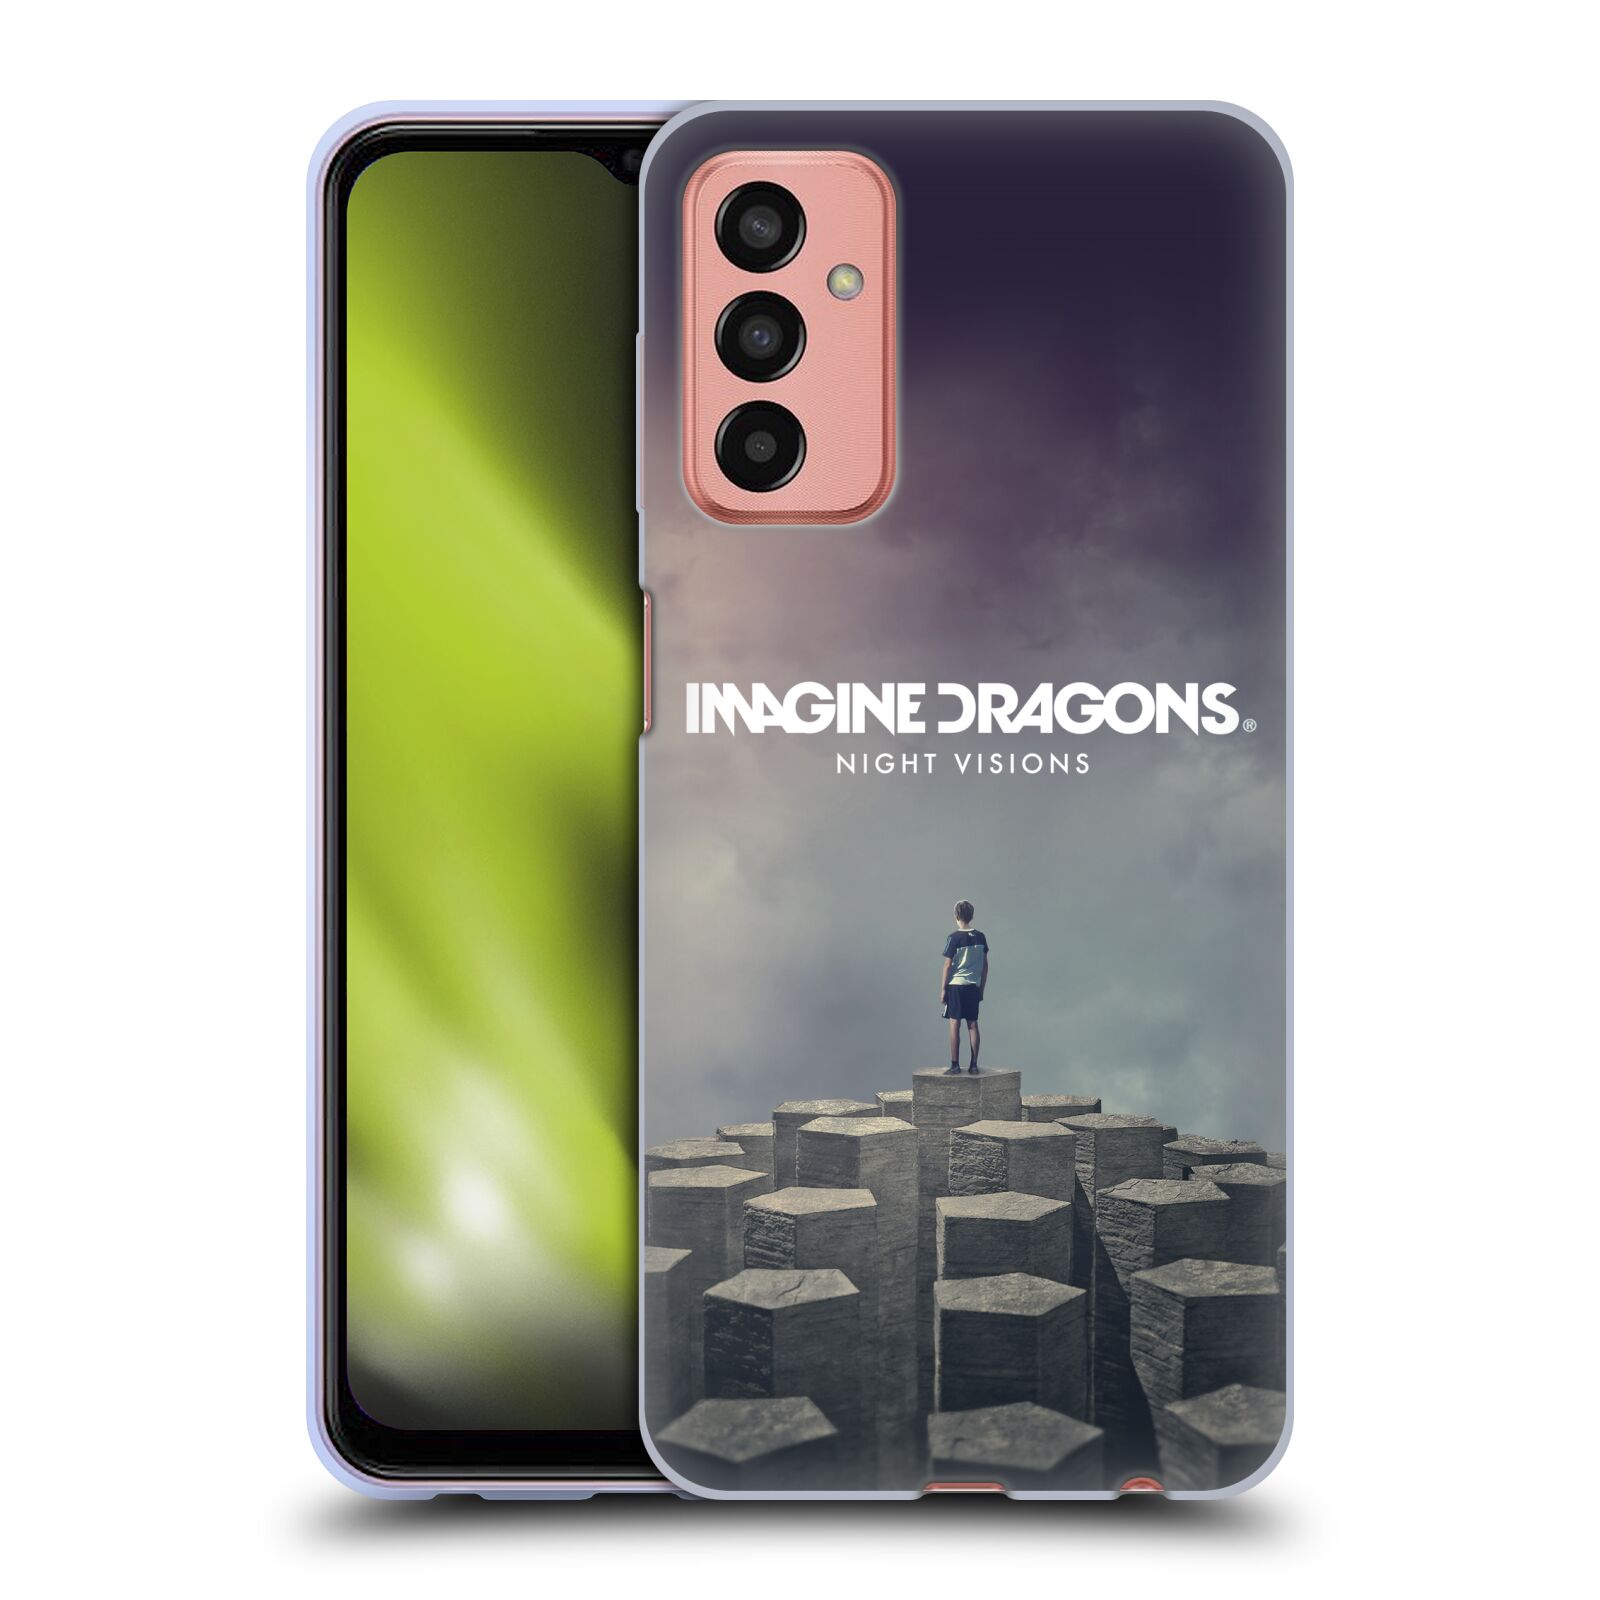 Silikonové pouzdro na mobil Samsung Galaxy M13 - Imagine Dragons - Night Visions